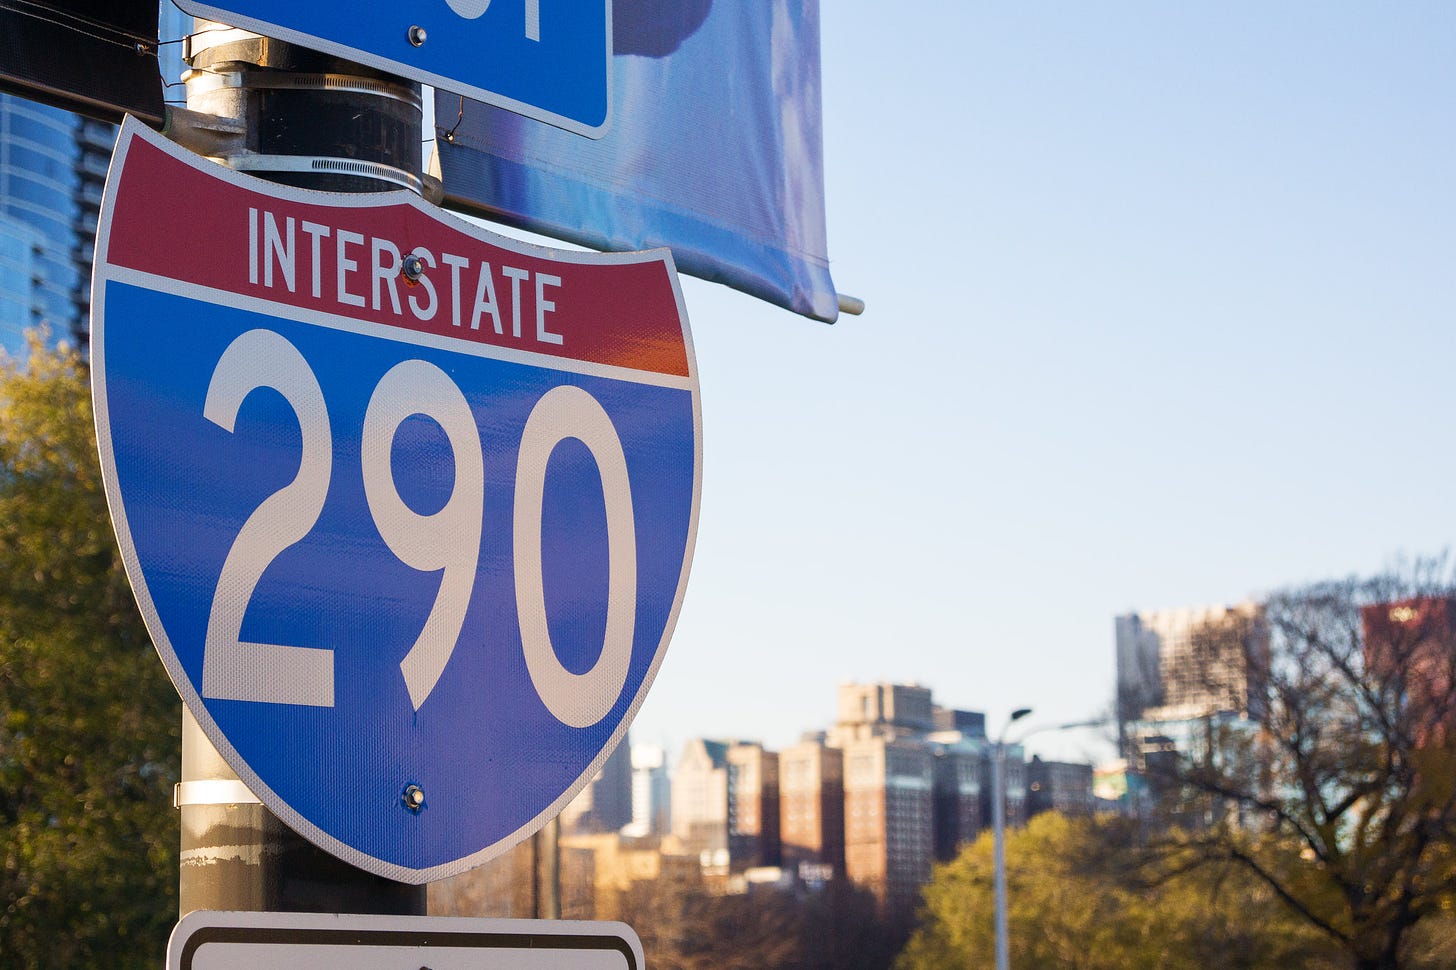 Interstate 290 sign